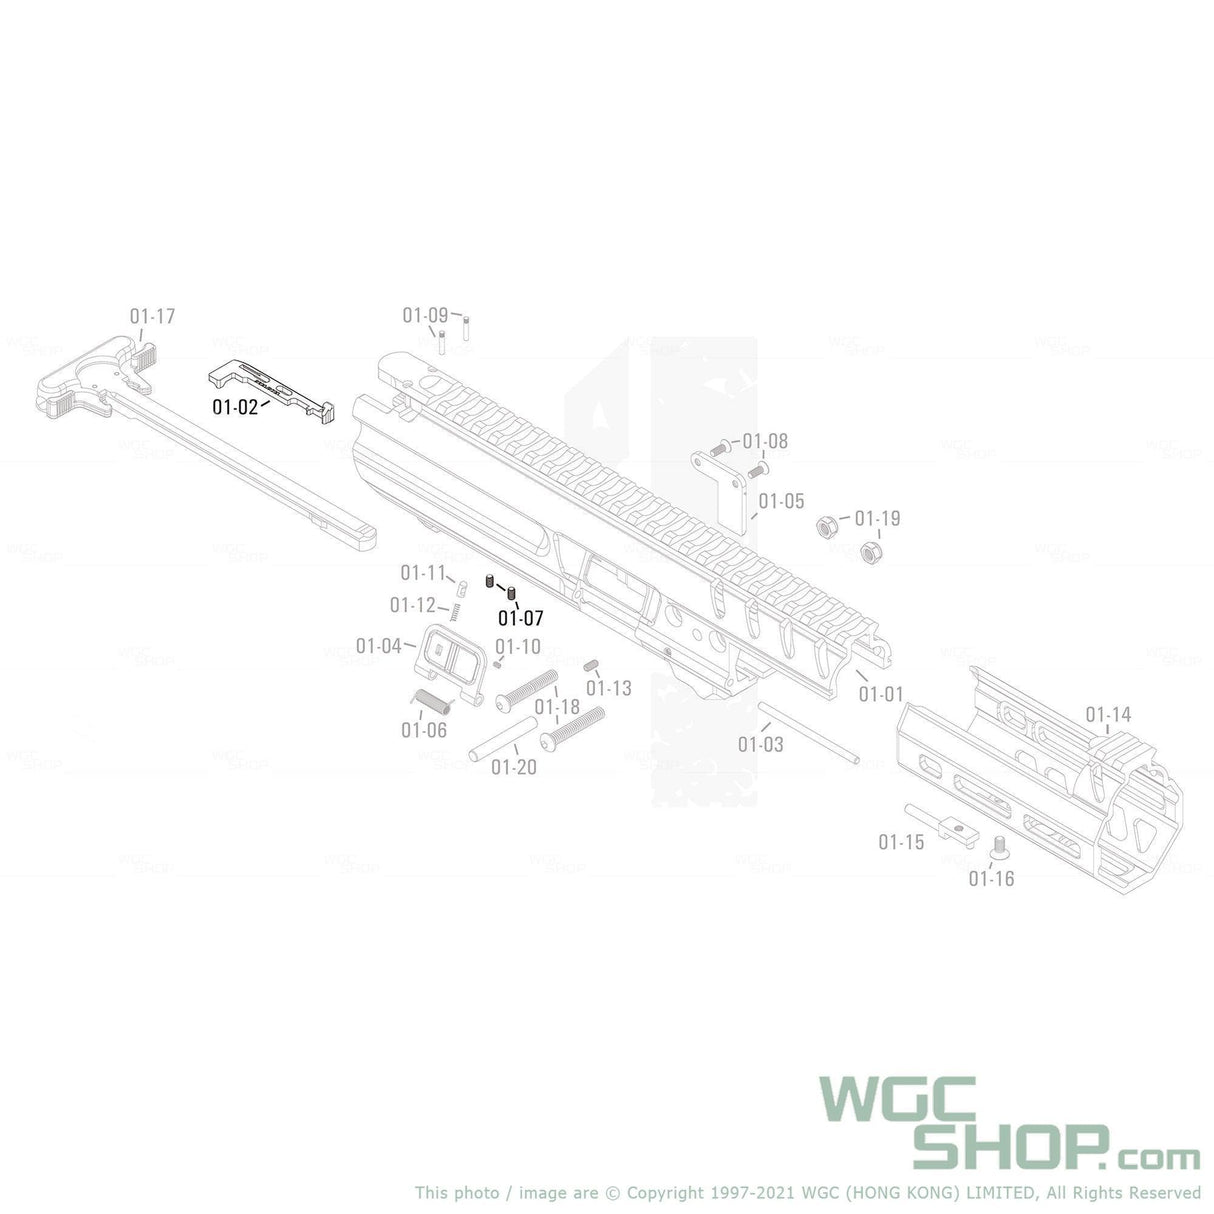 APFG Original Parts - MPX GBB Hammer Connecting Level ( 01-02 / 01-07 x 2 ) - WGC Shop